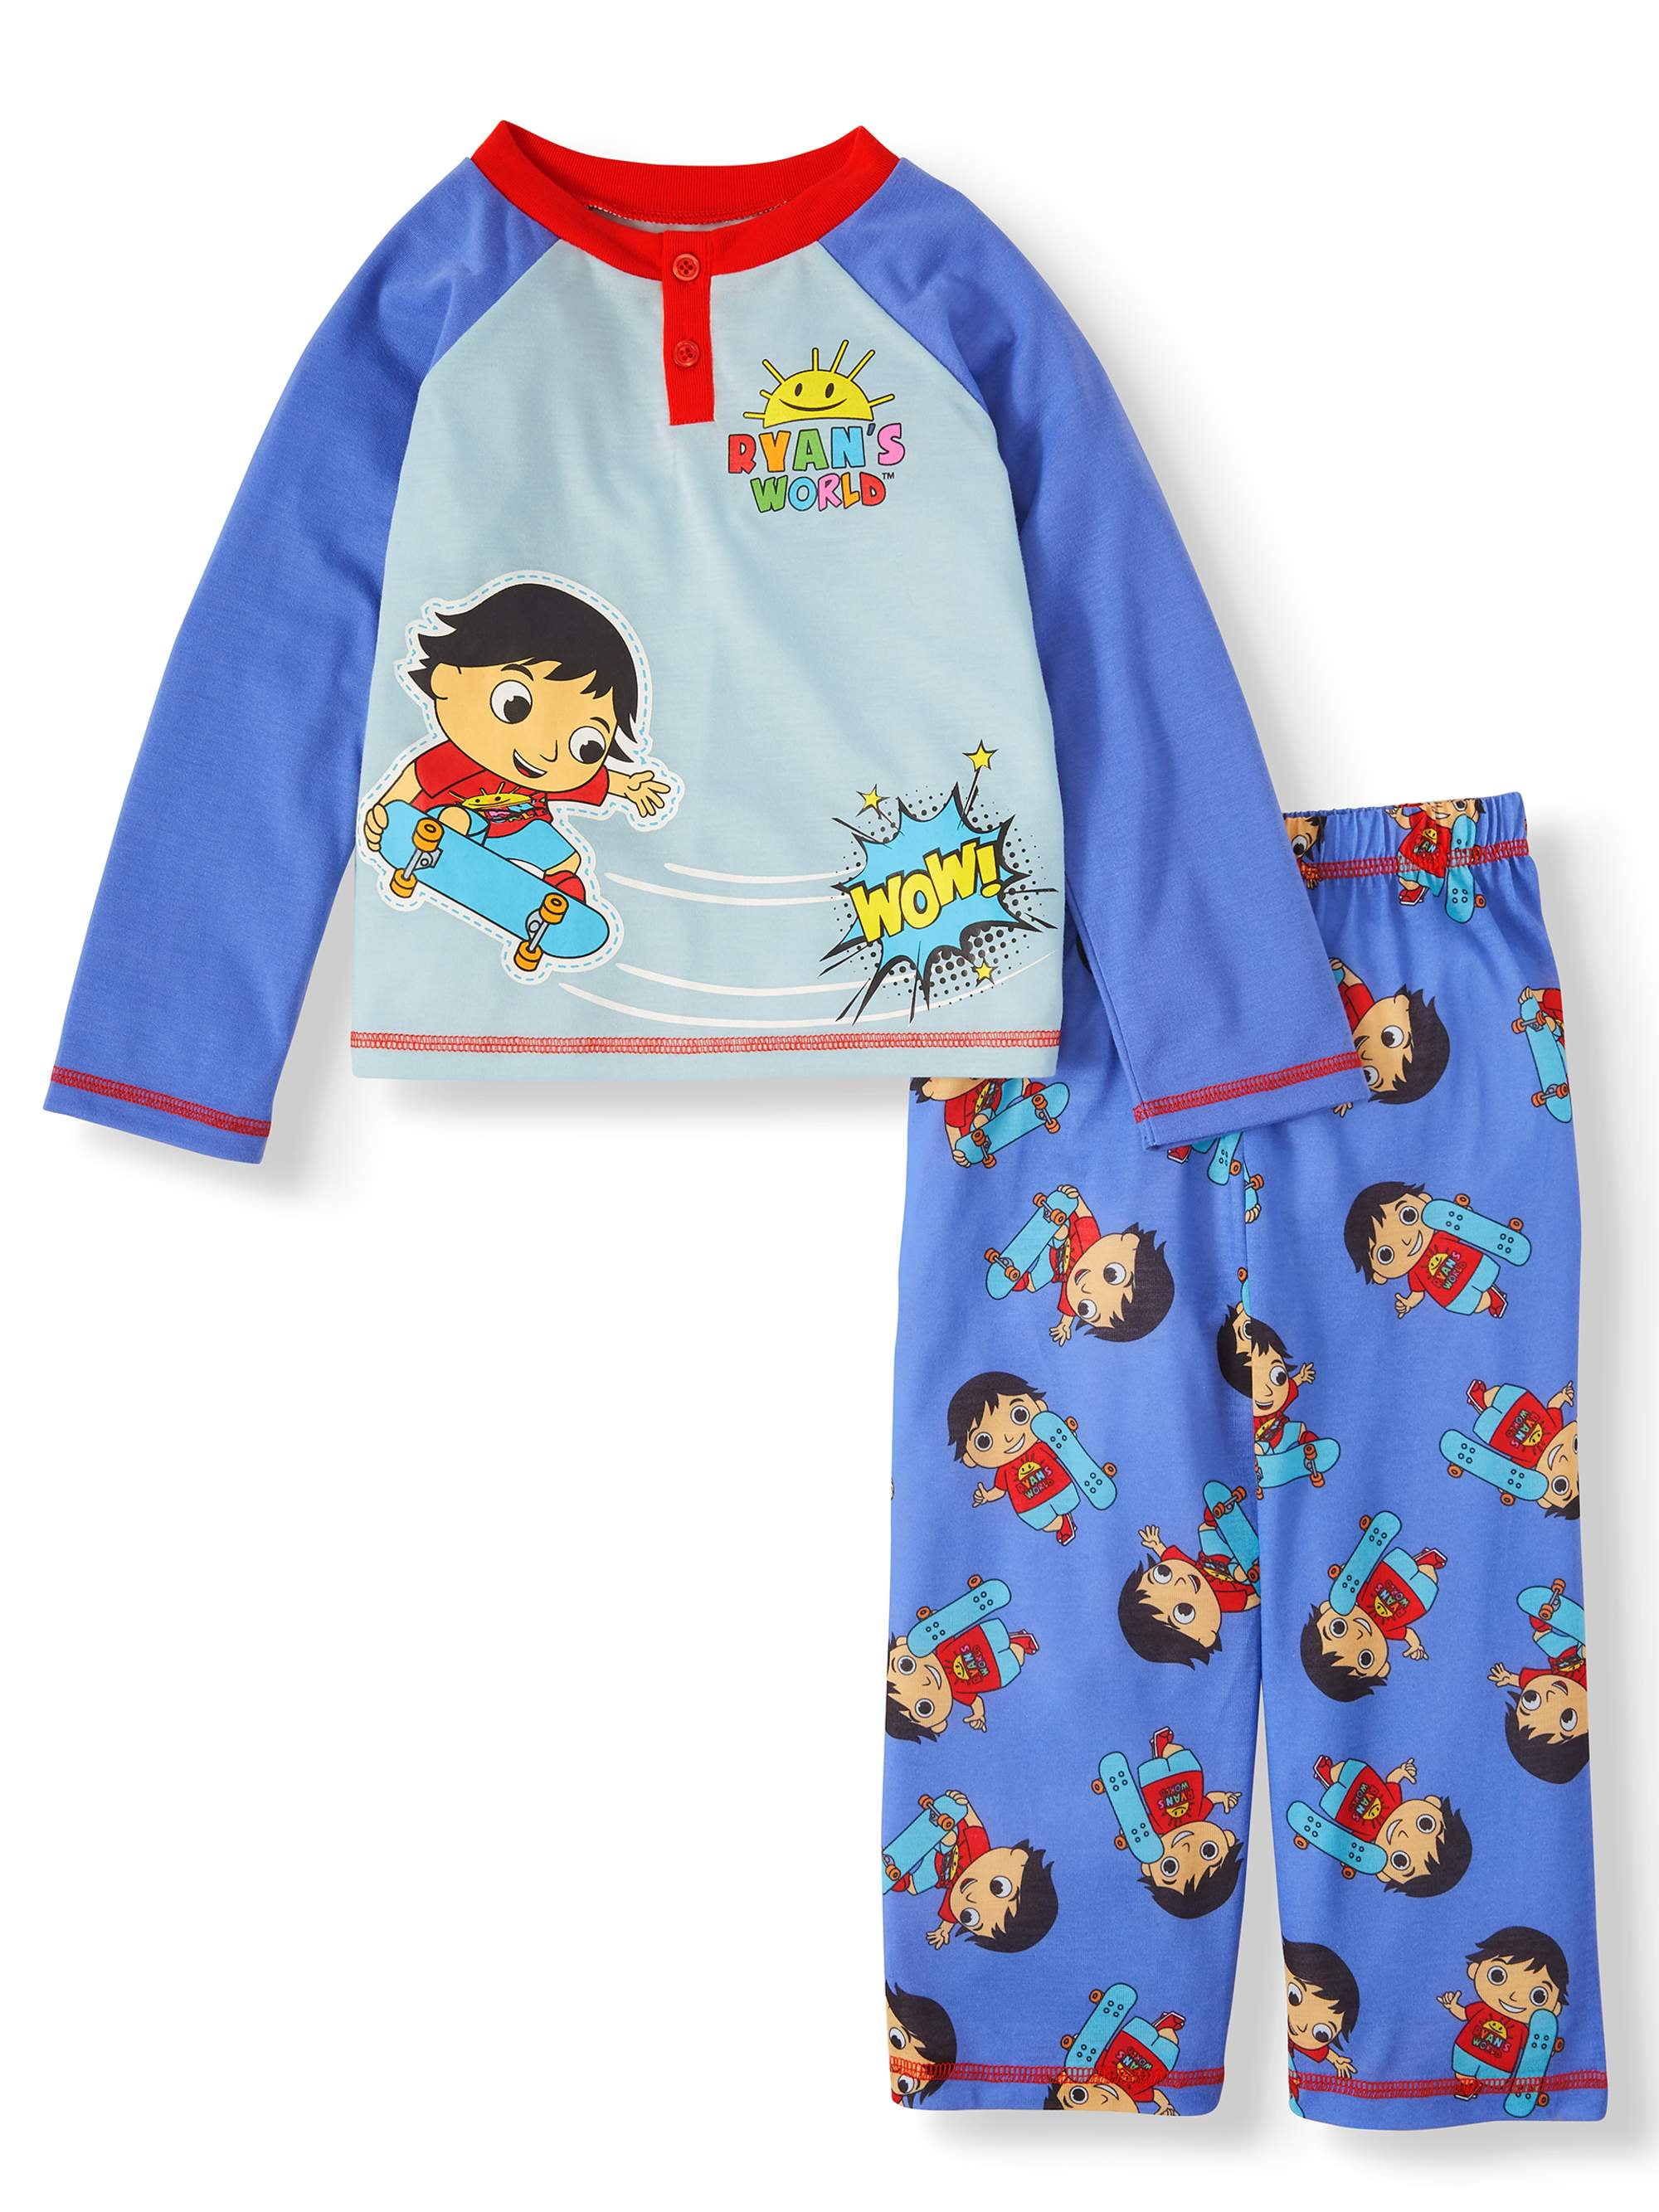 shelry Truck Boys Pajamas Toddler Sleepwear Clothes T Shirt Pants Set Kids Size 2Y-7Y